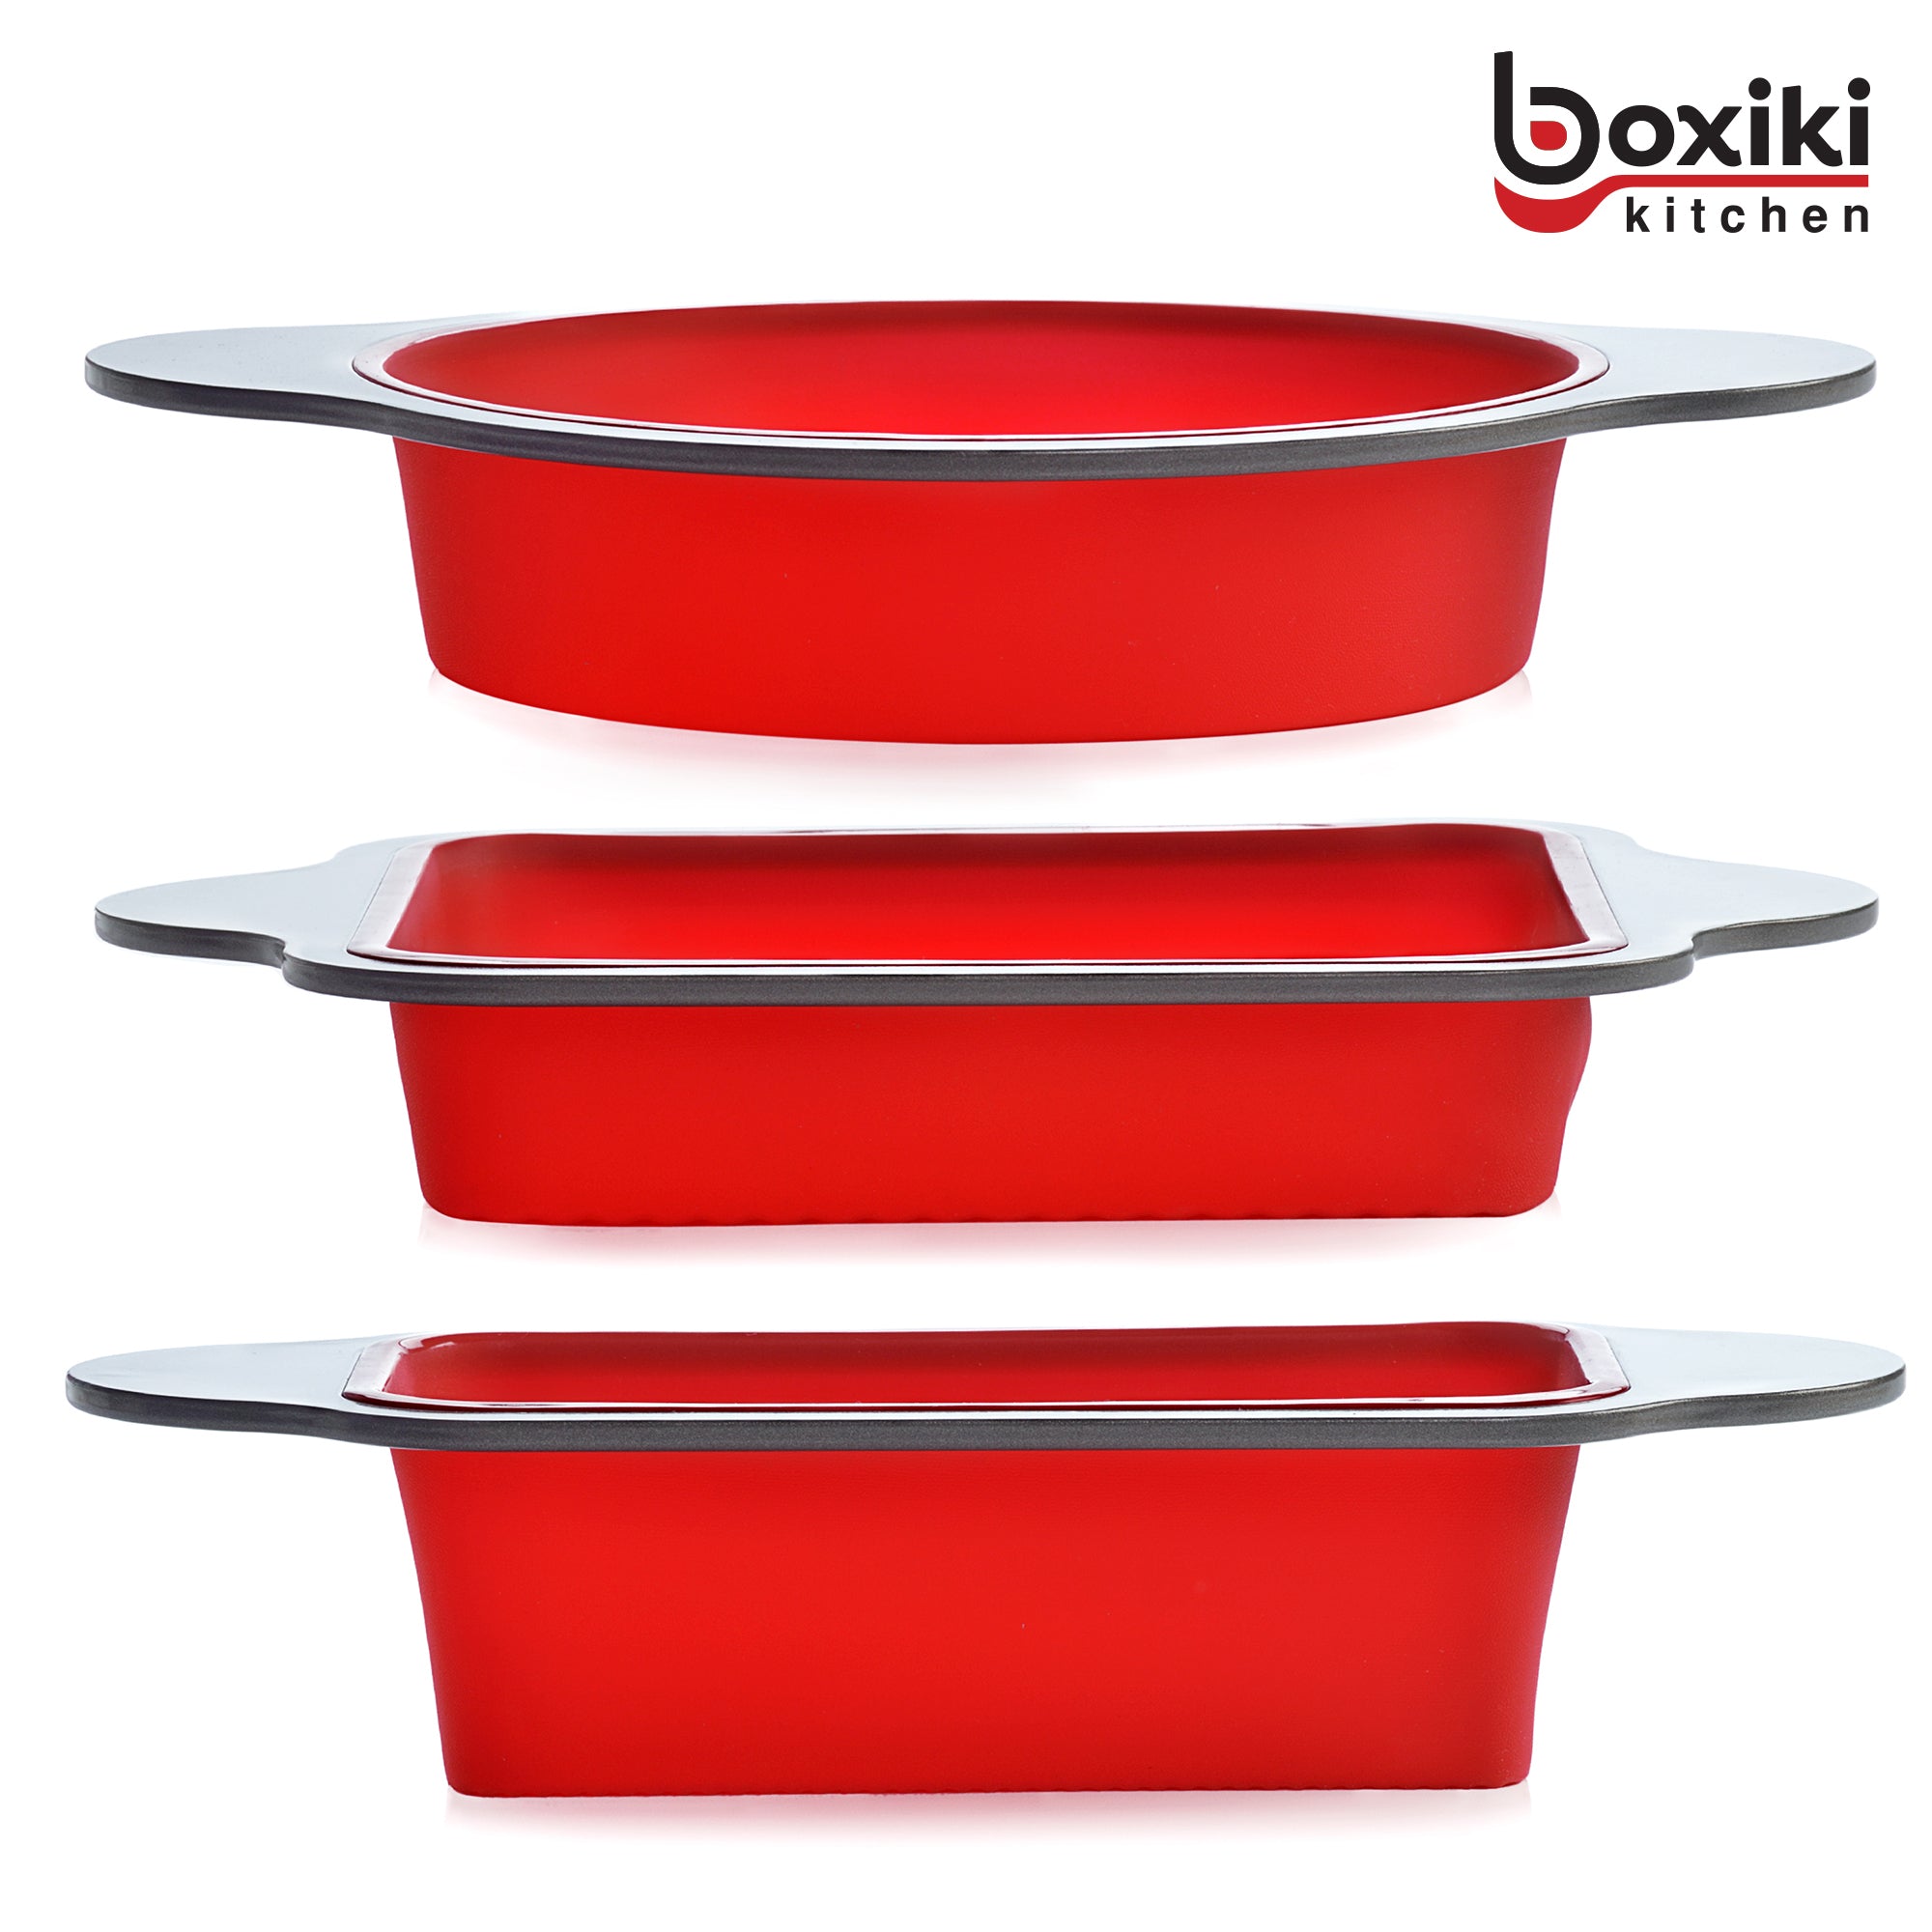 Boxiki Kitchen Non-Stick Steel 8x8 Square Baking Pan Durable, Convenient,  and Premium Quality Non-Stick Baking Mold Bakeware.